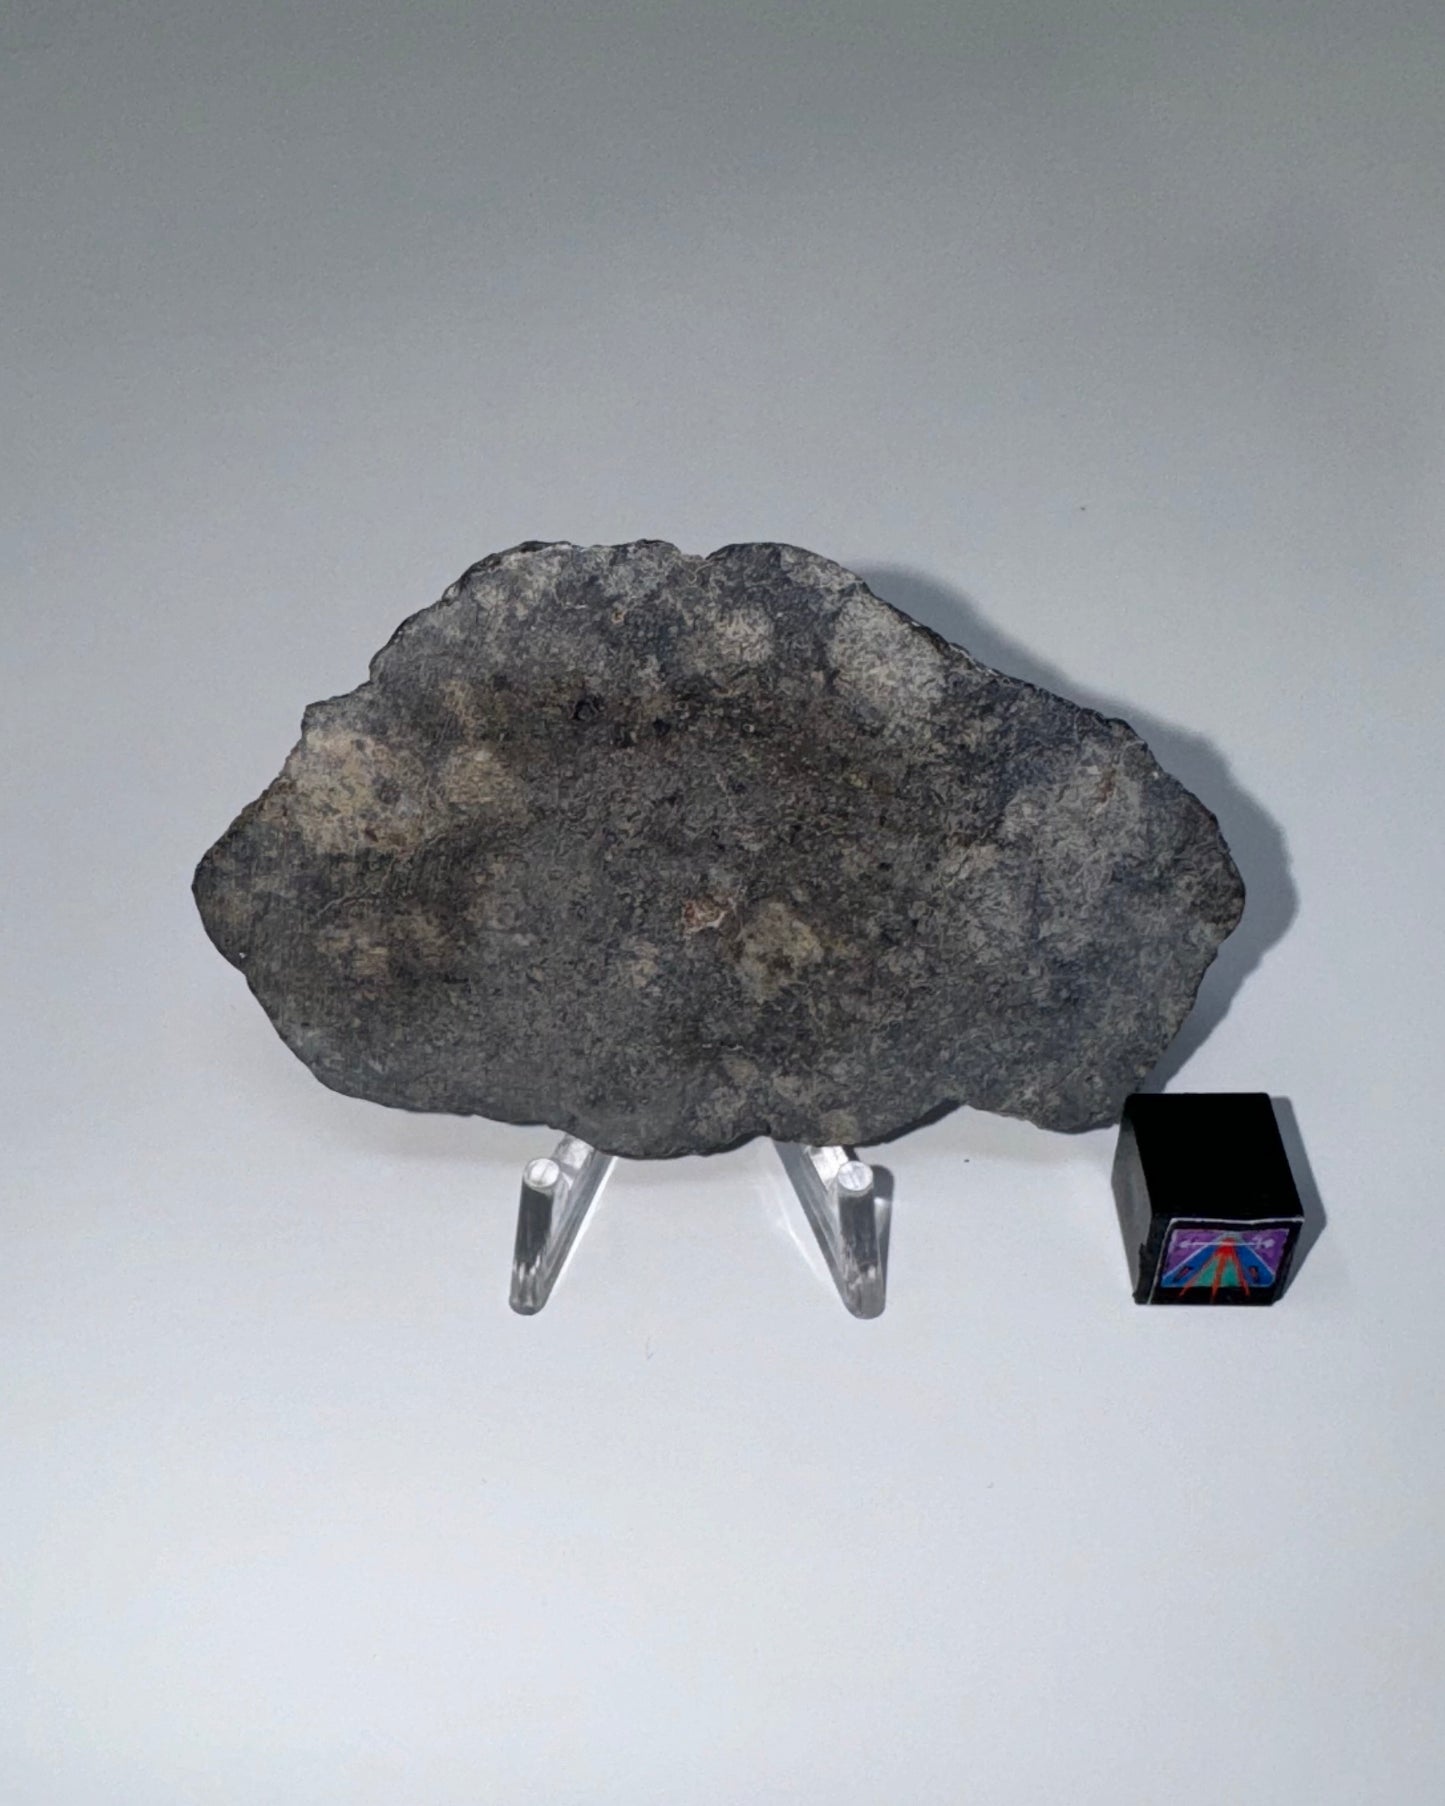 NWA 15923 Eucrite Meteorite - 20.2g (Parent Body: Asteroid)